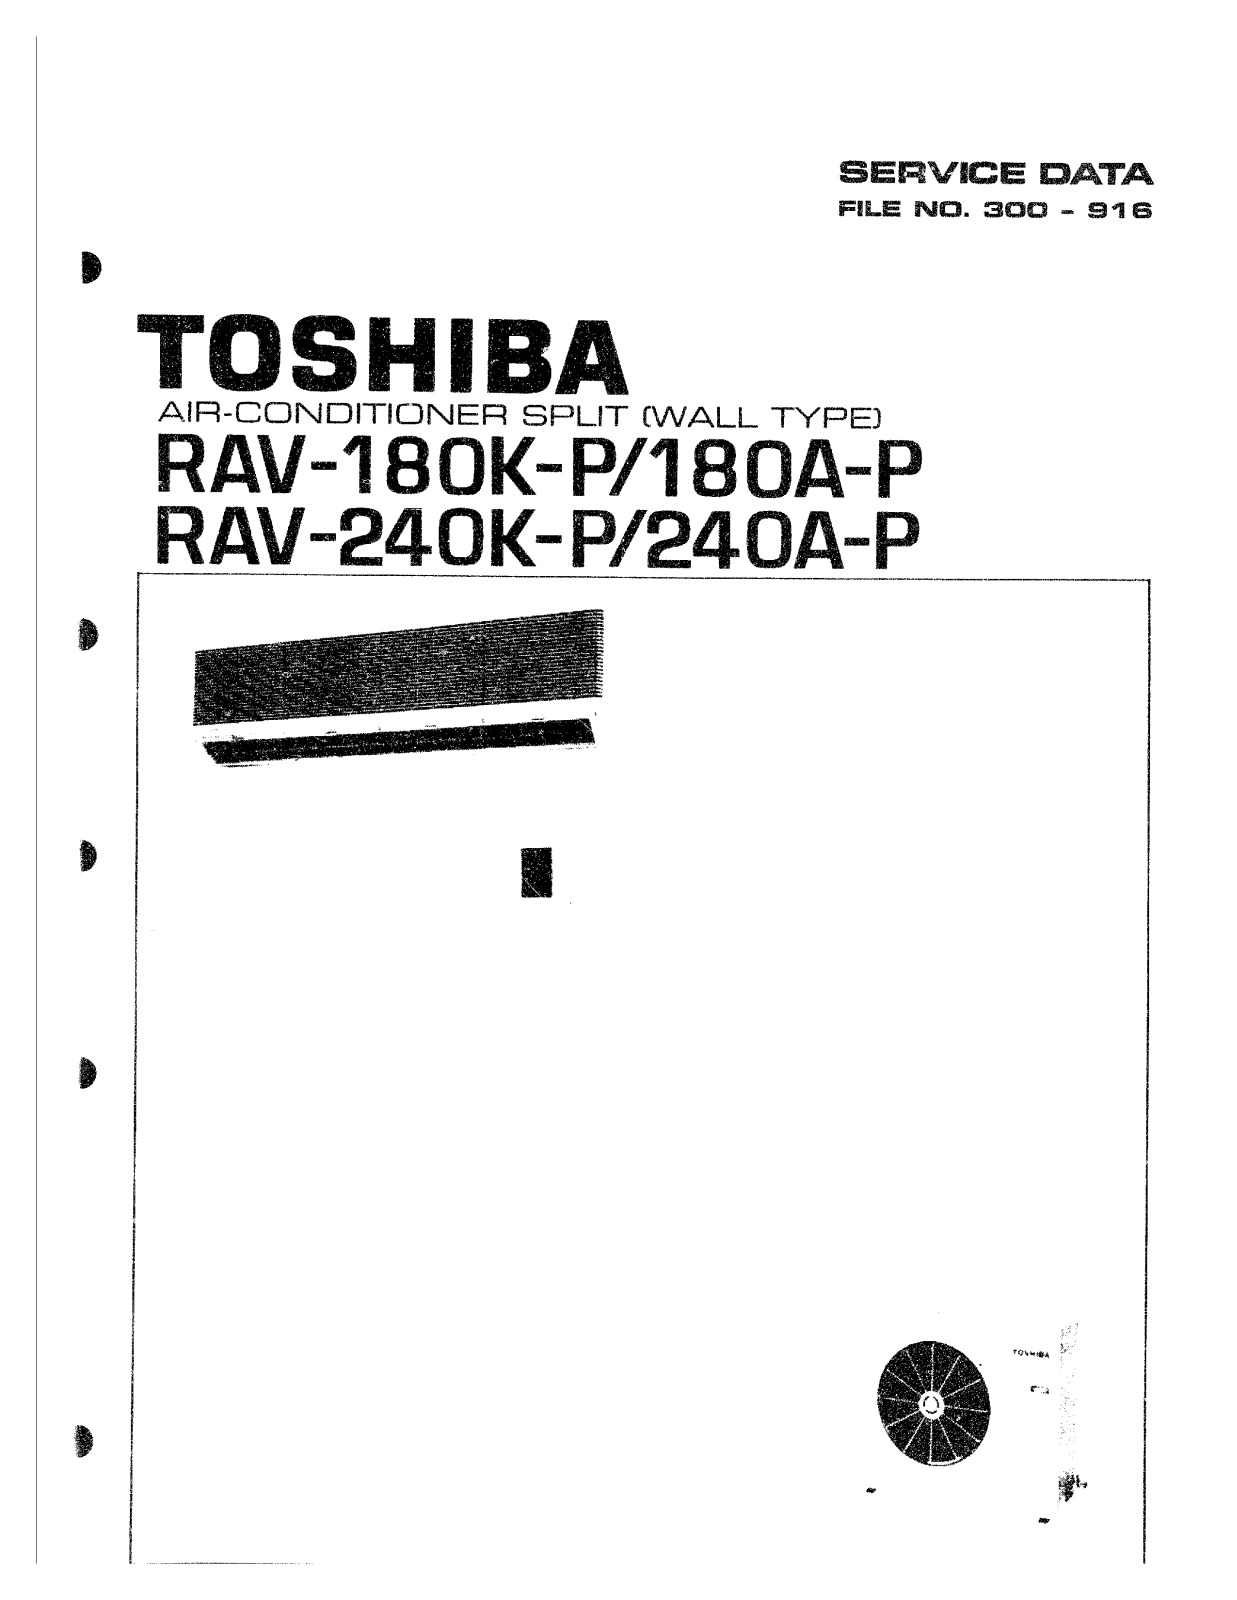 Toshiba RAV-240A-P, RAV-240K-P SERVICE MANUAL